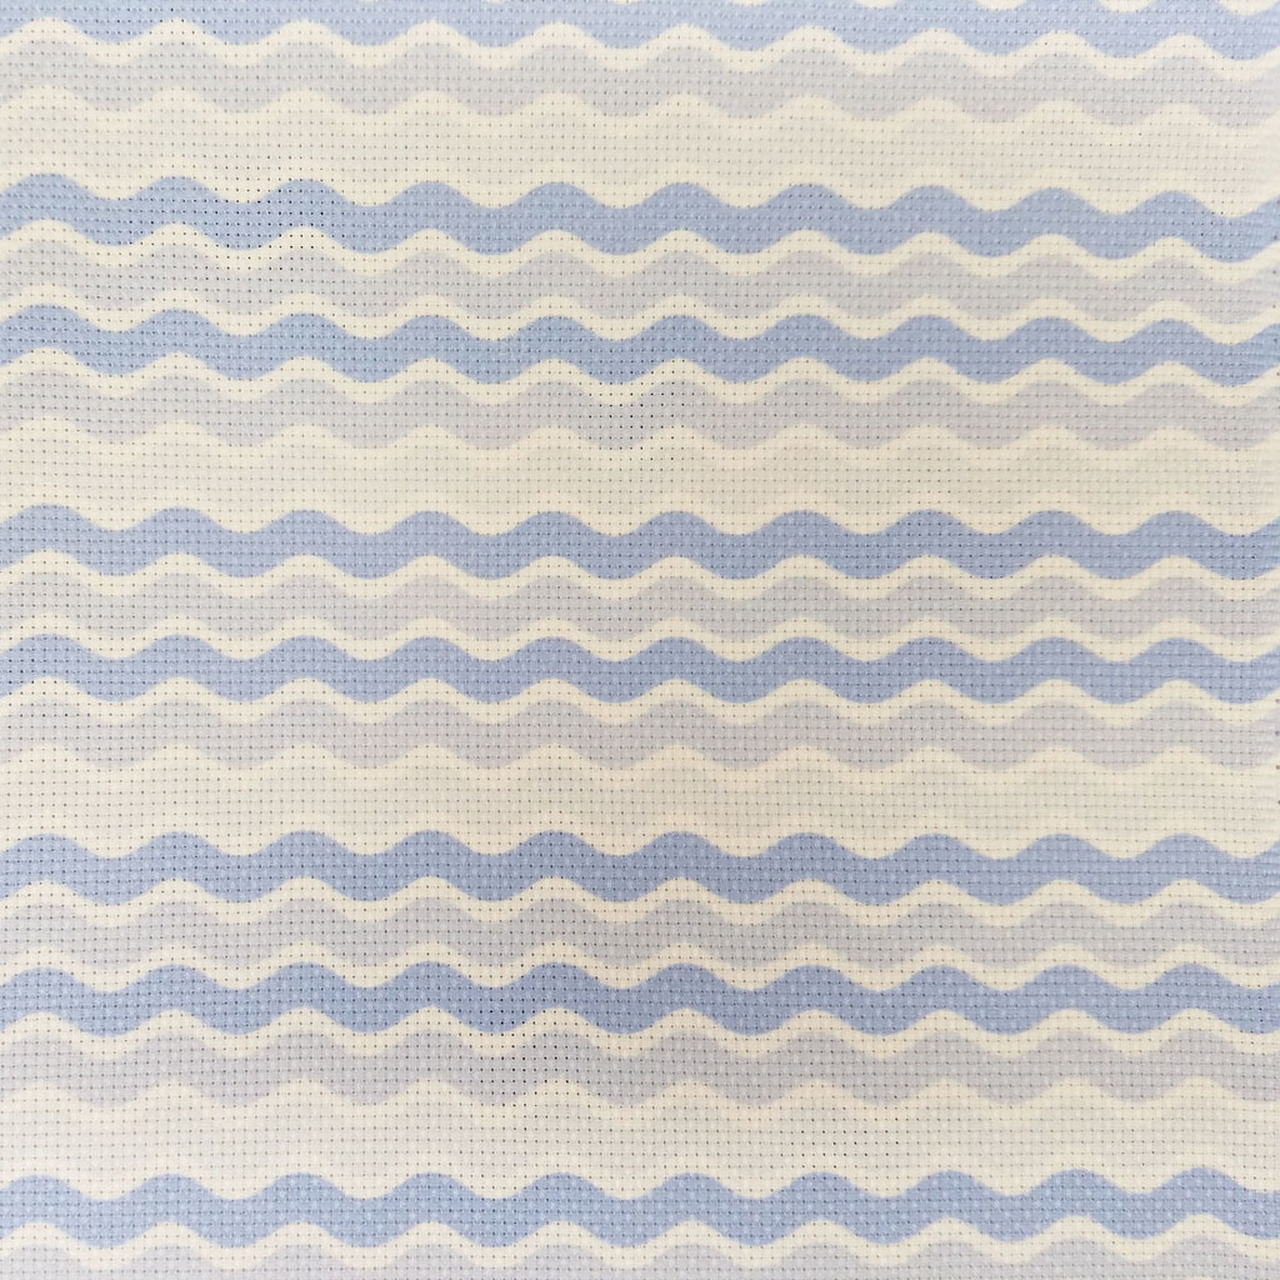 Blue Waves Patterned Cross Stitch Fabric